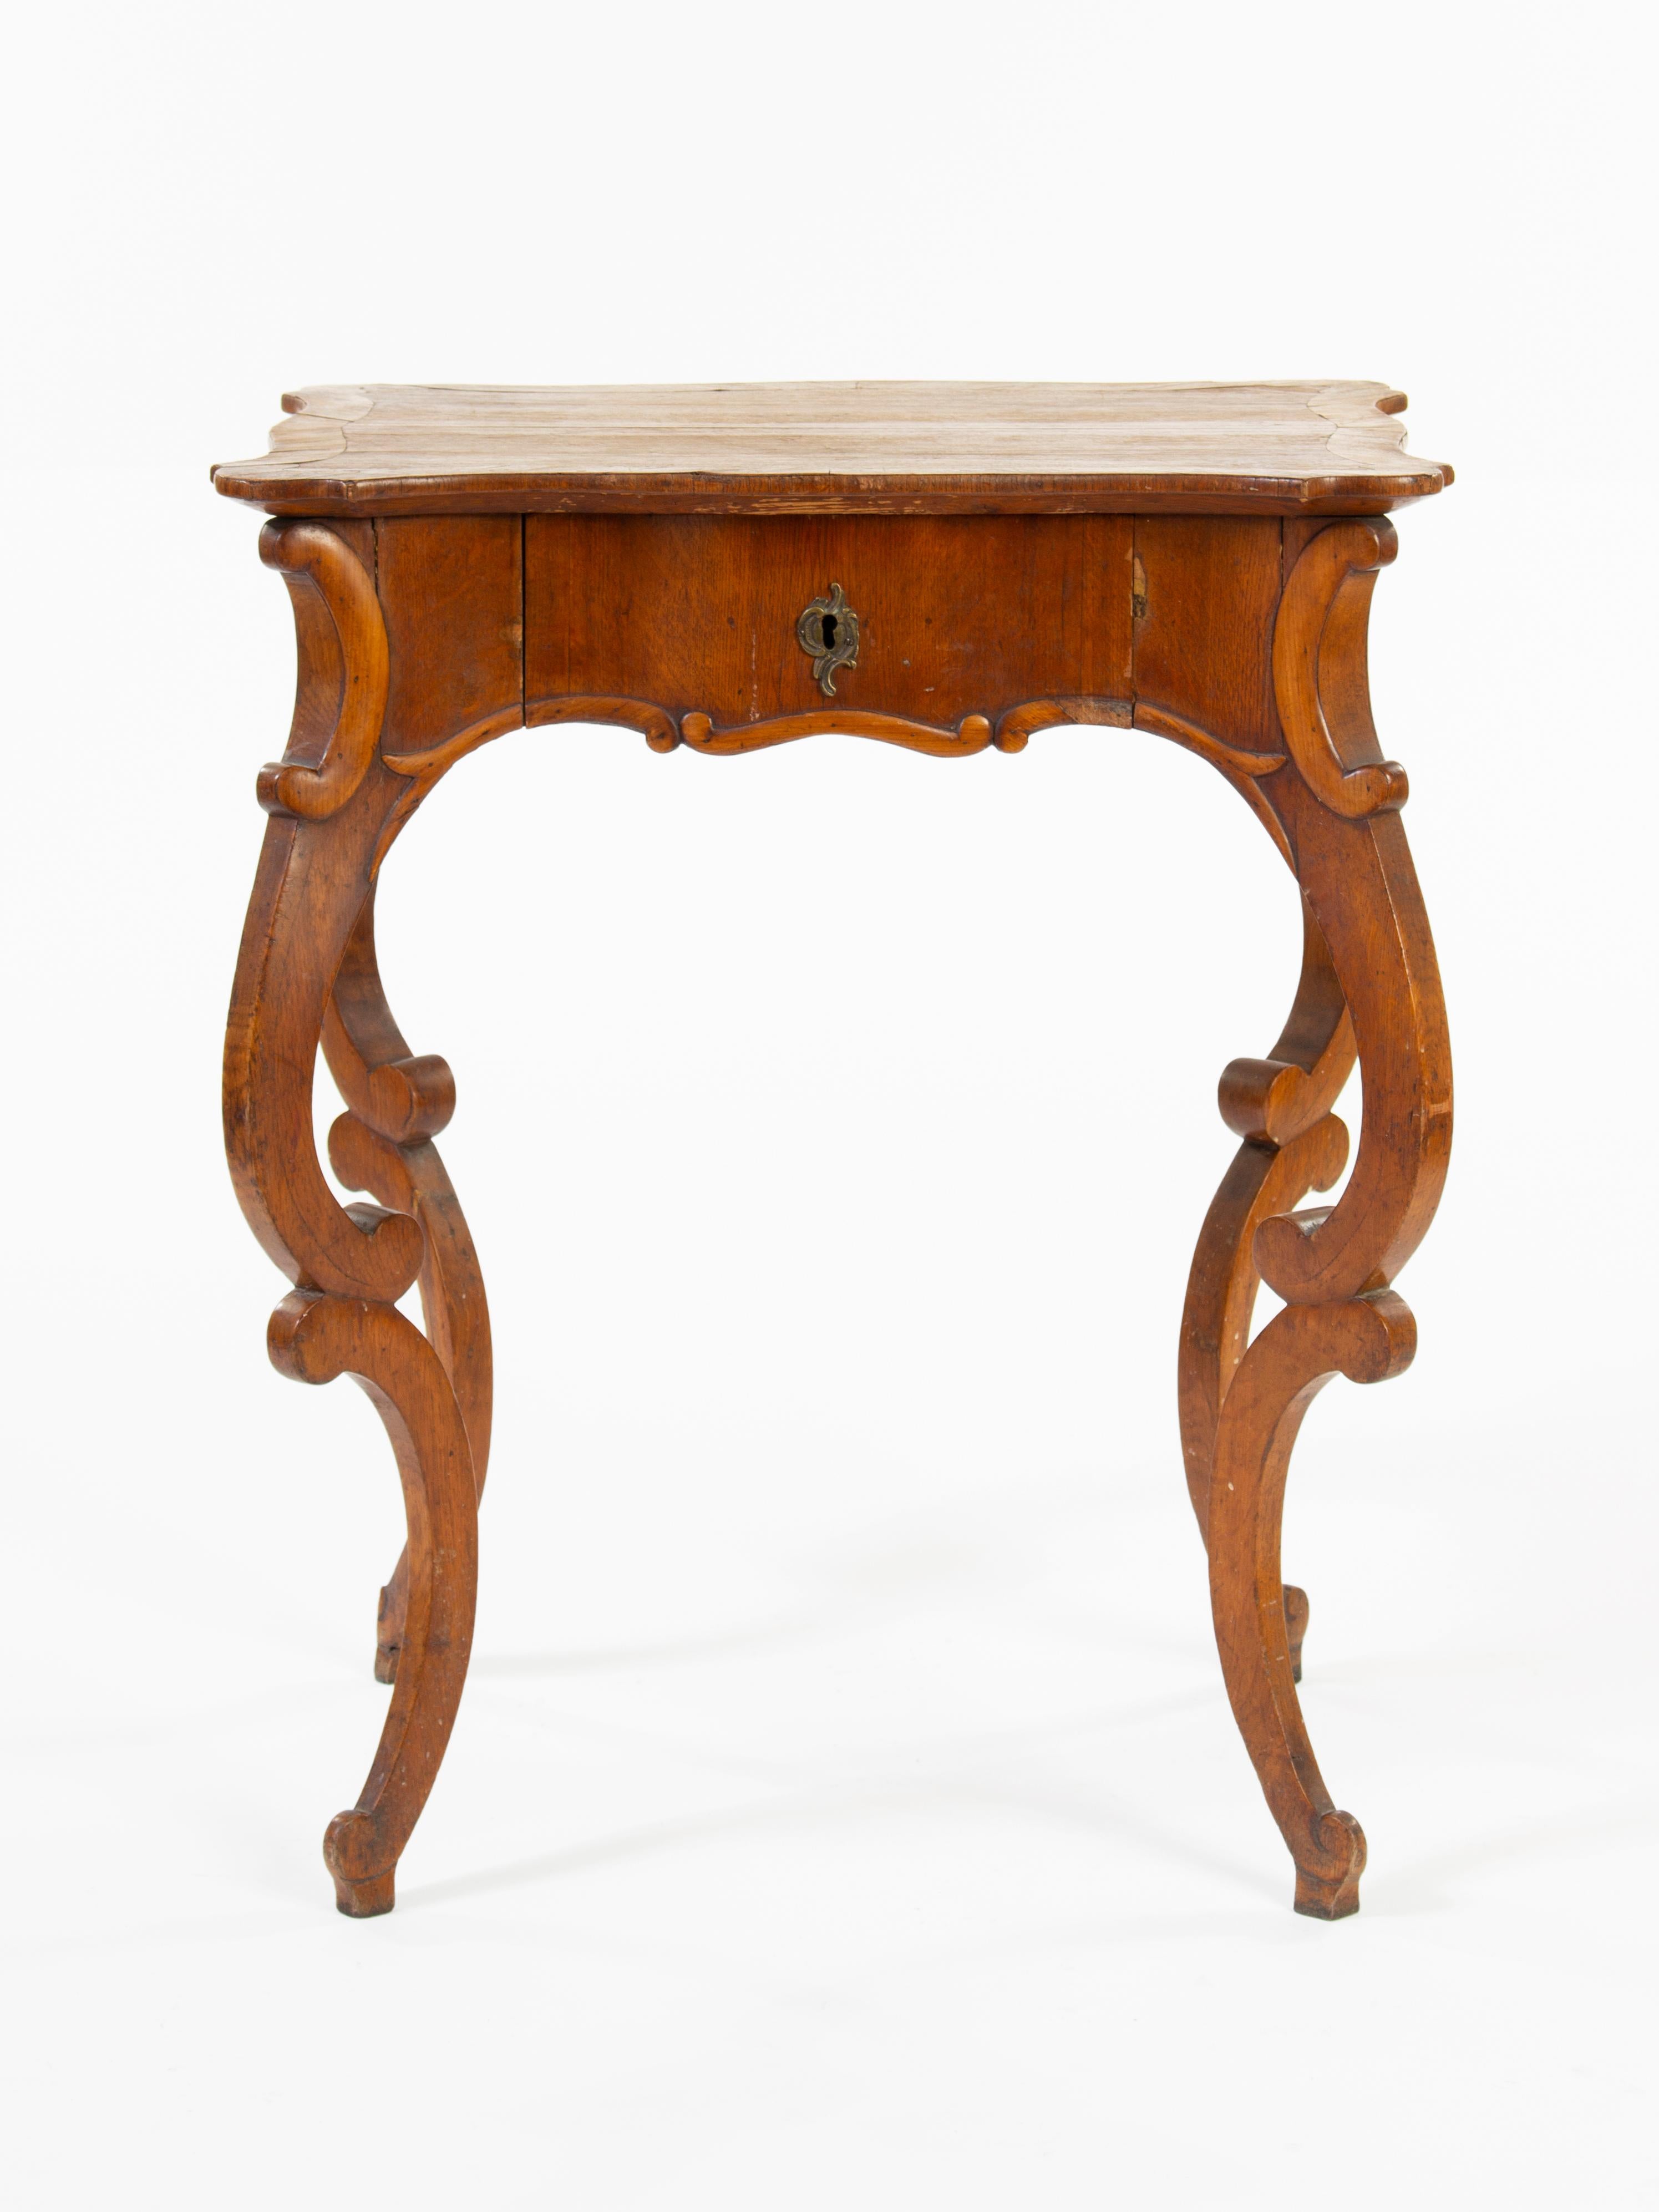 Louis Phillippe style desk in the style of rococo revival taste, arround 1870.
Pine, walnut veneer.